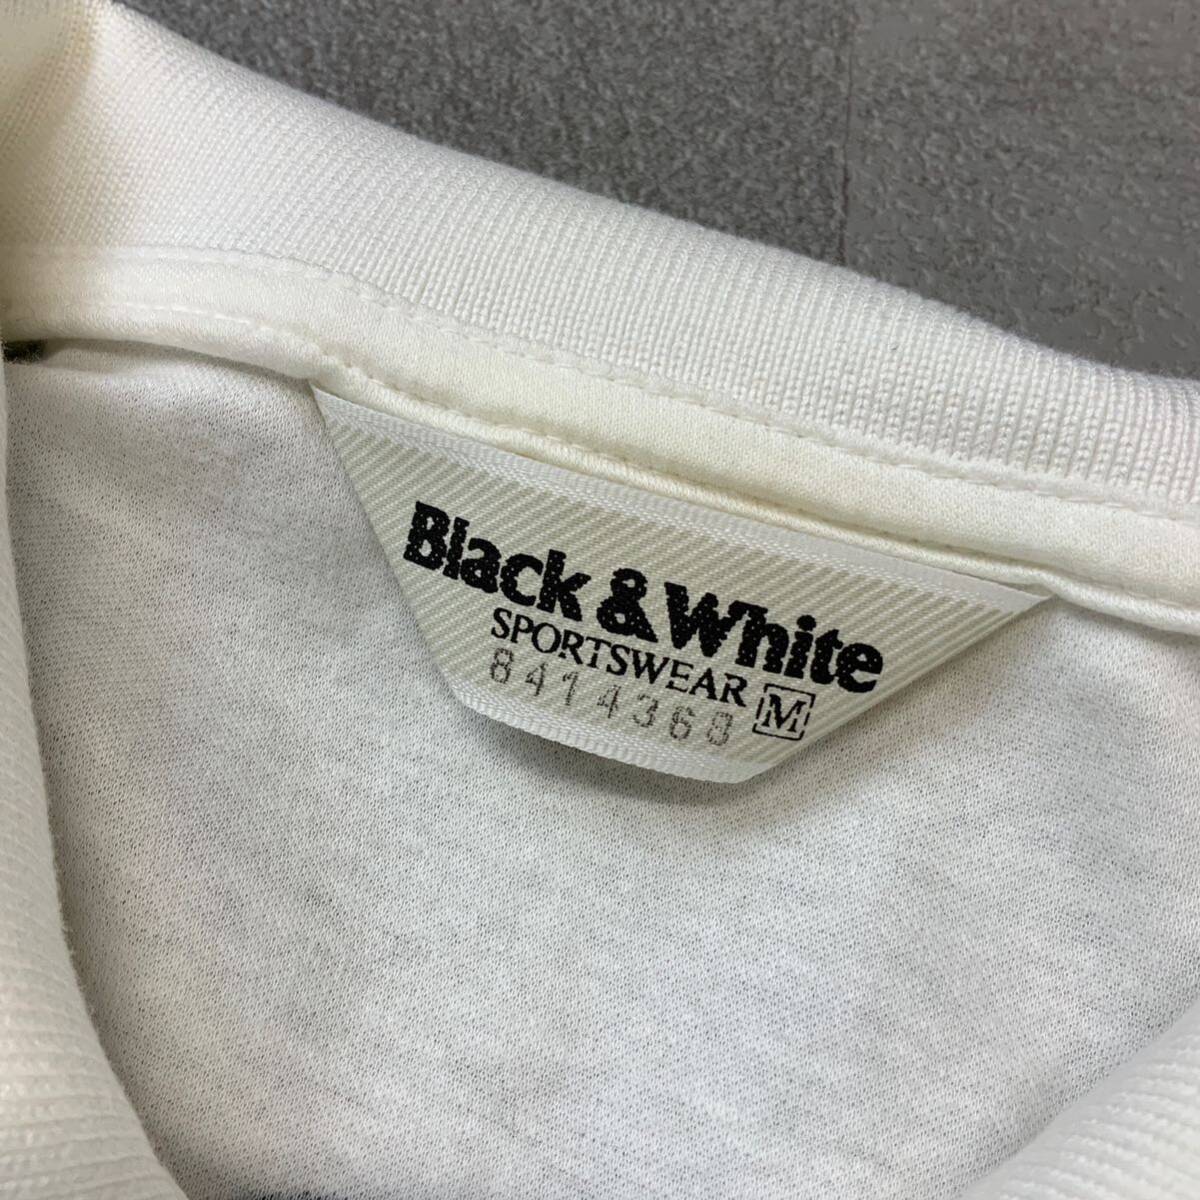  superior article BLACK&White black & white dot design polo-shirt with short sleeves Golf shirt men's M size white golf